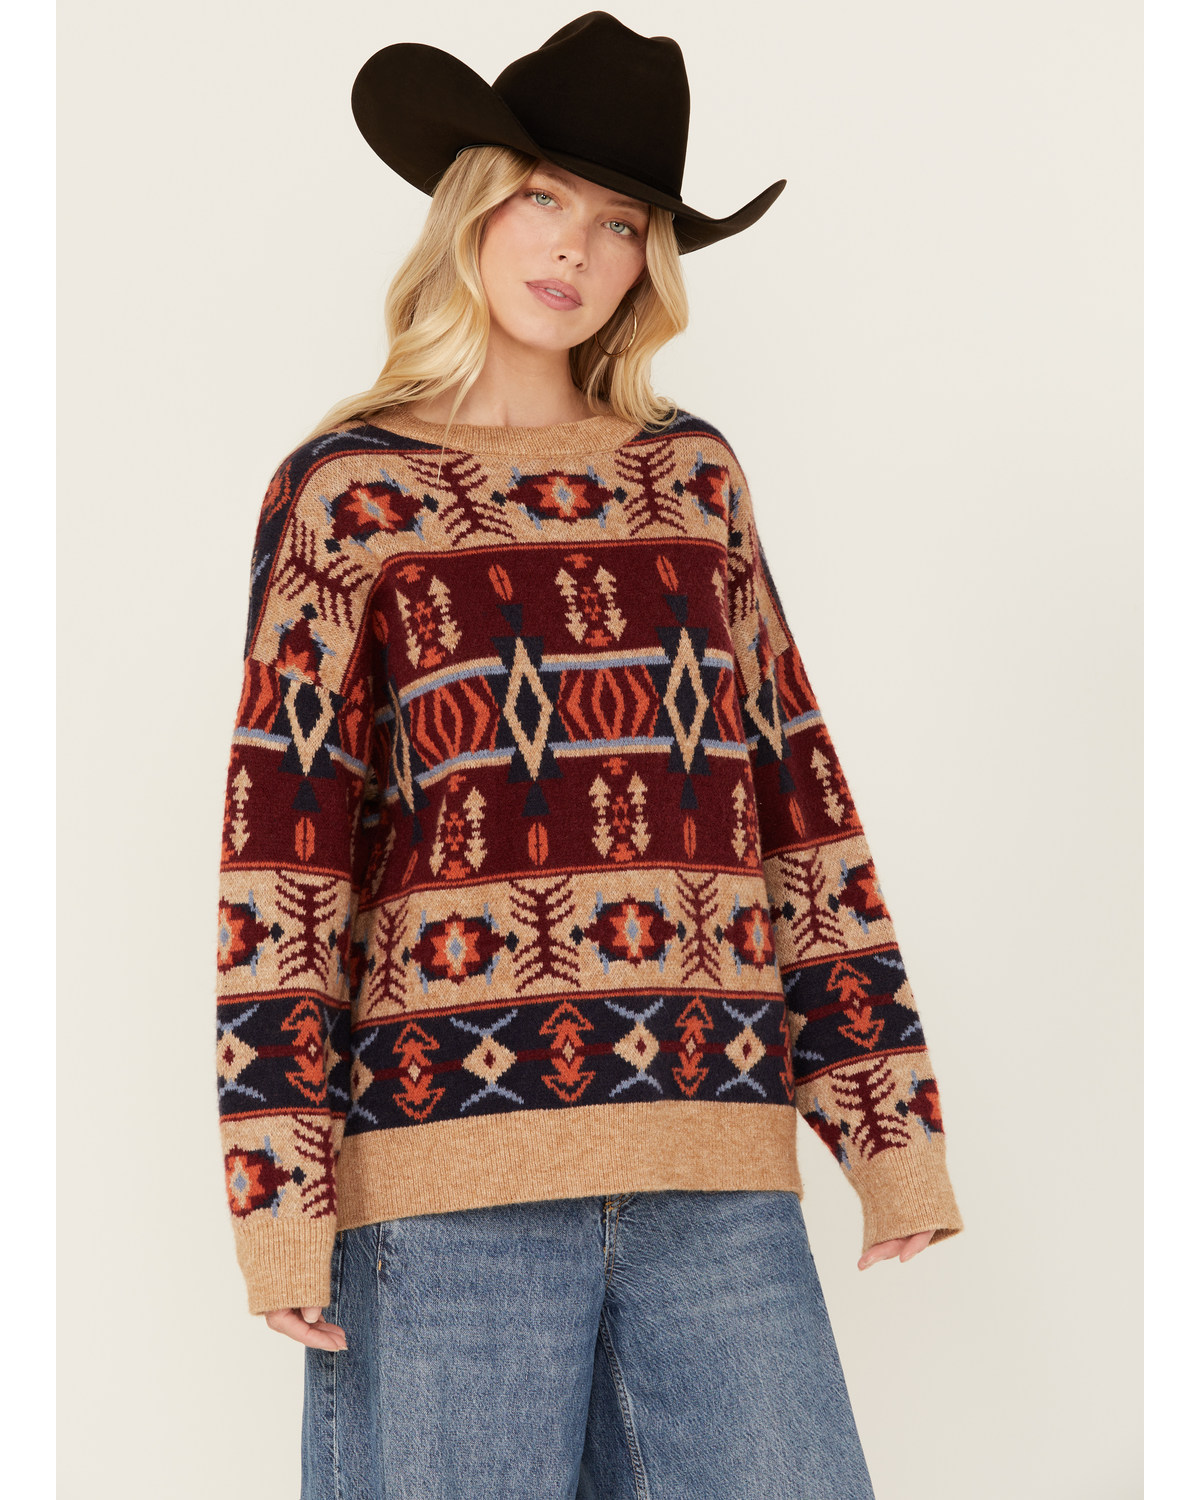 Panhandle Women's Southwestern Print Sweater